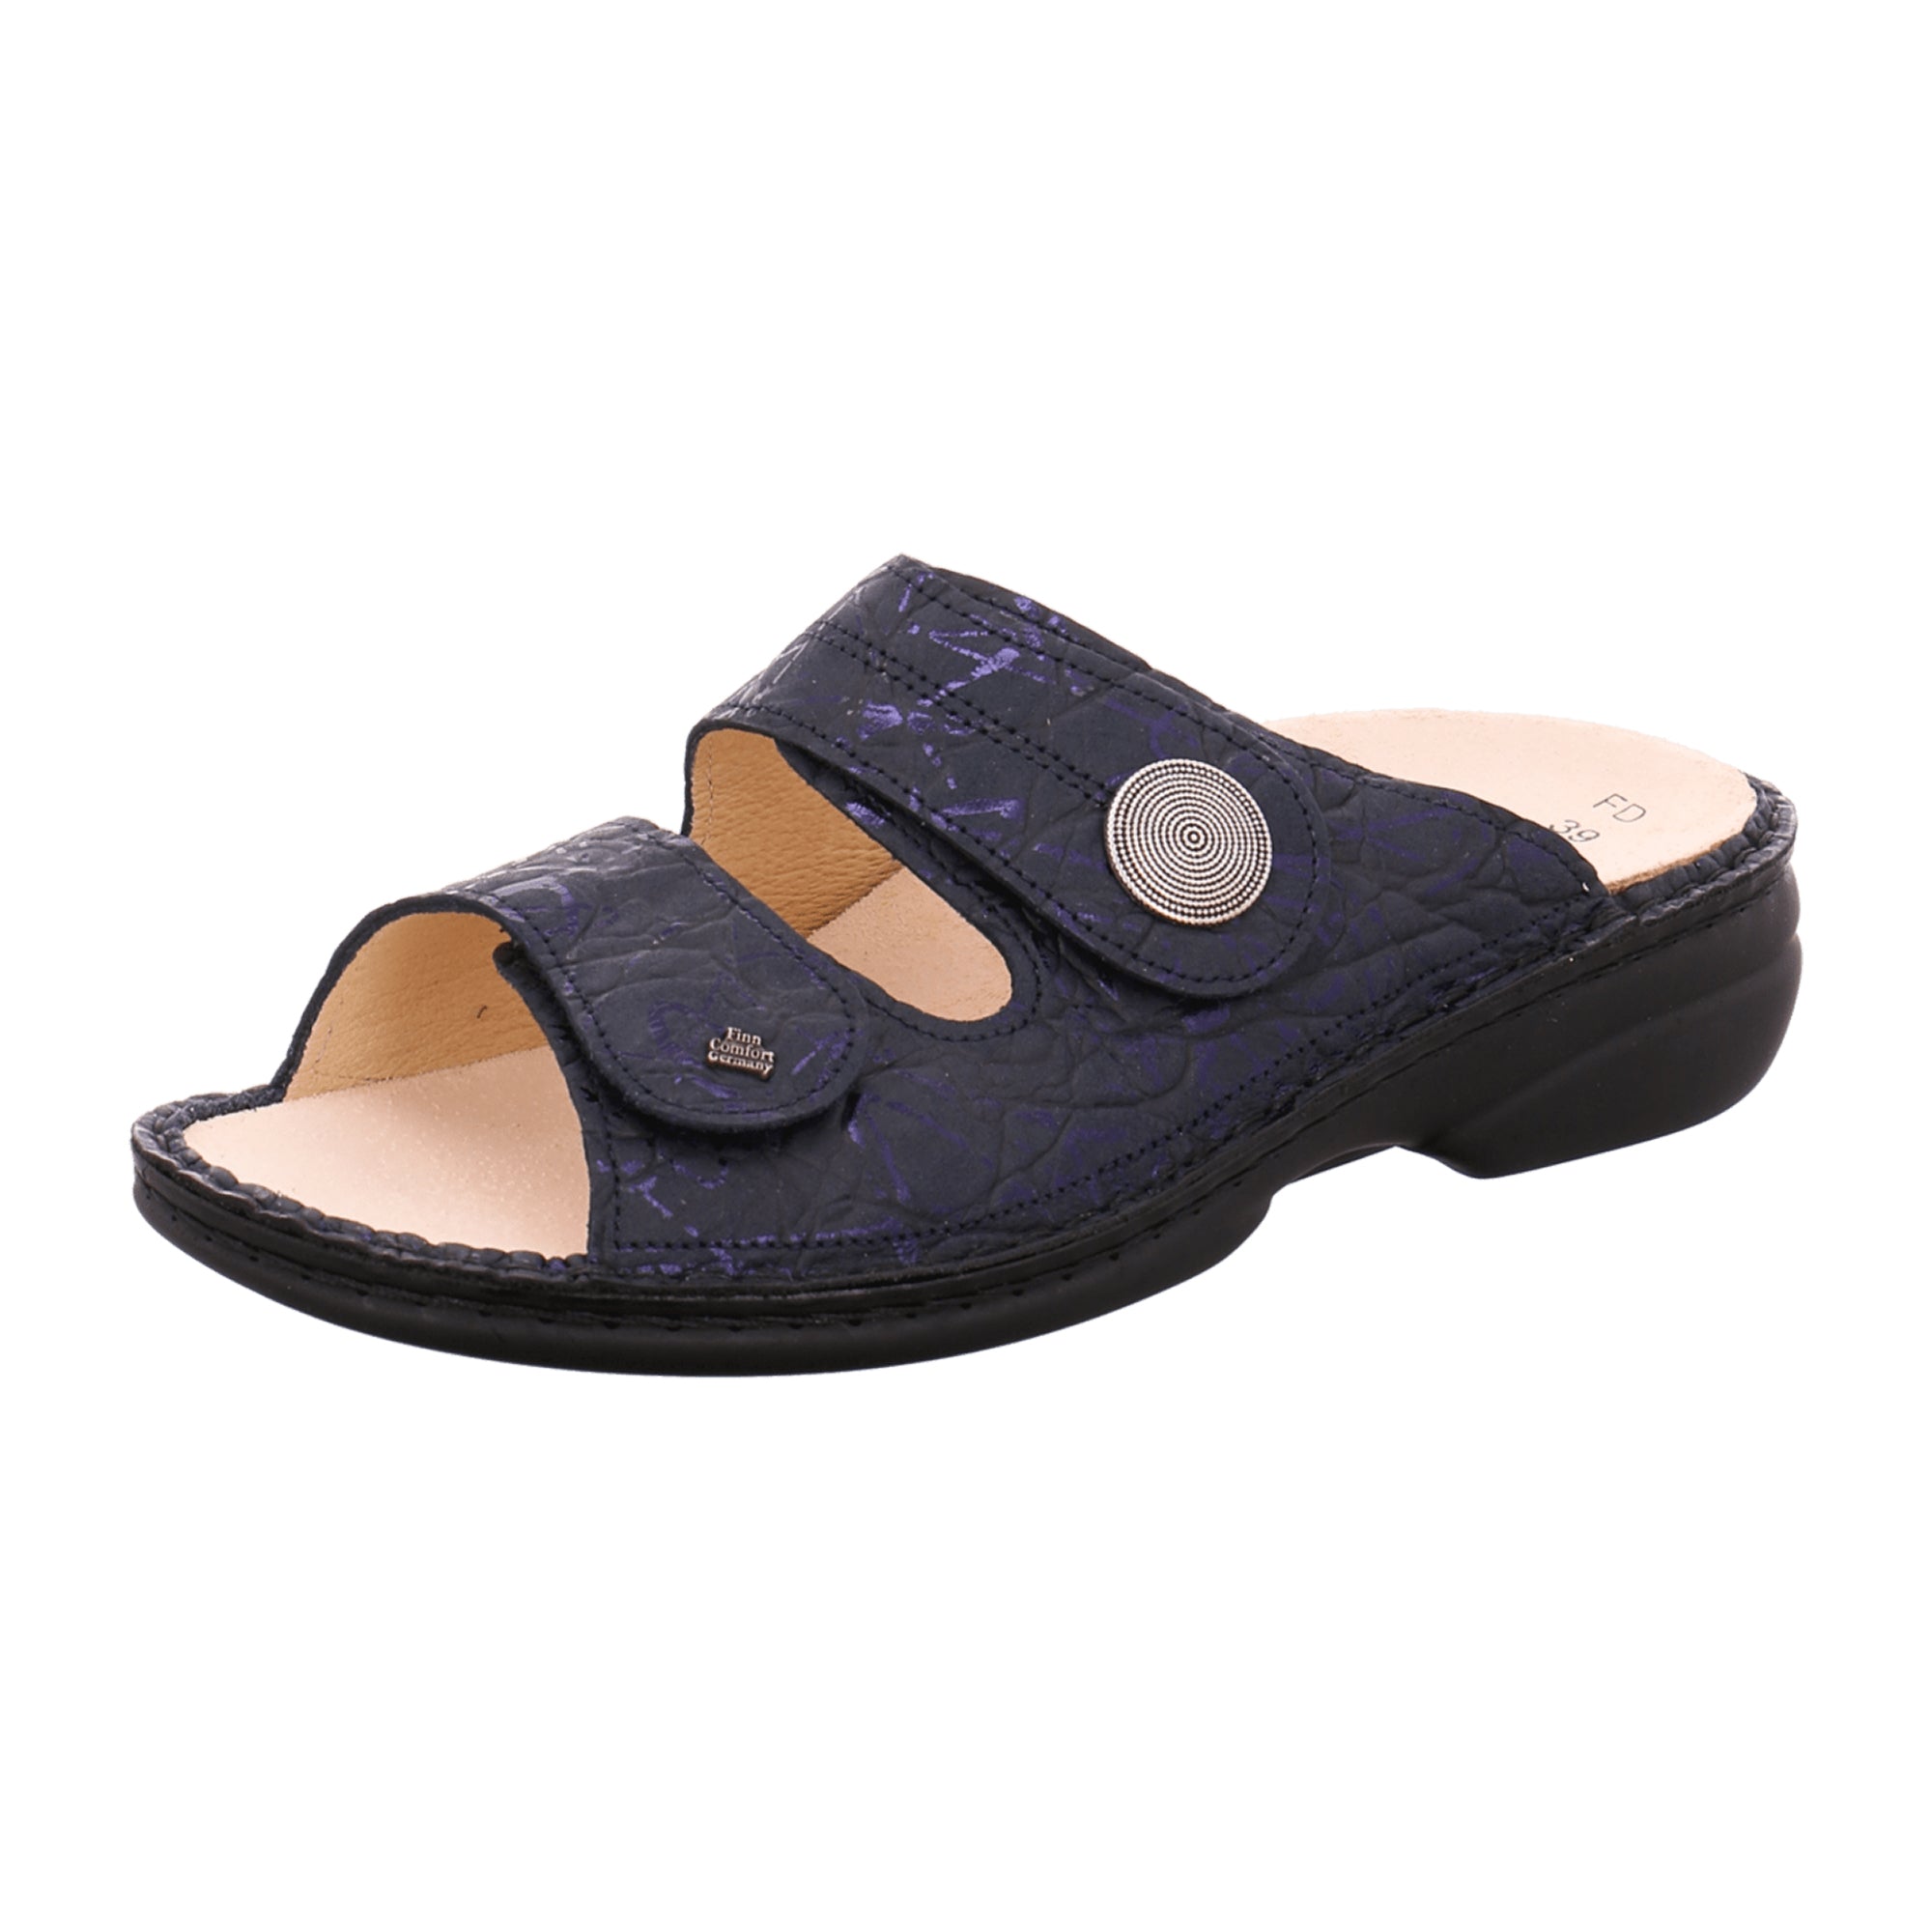 Finn Comfort Sansibar Women's Stylish Blue Sandals – Comfort and Durability